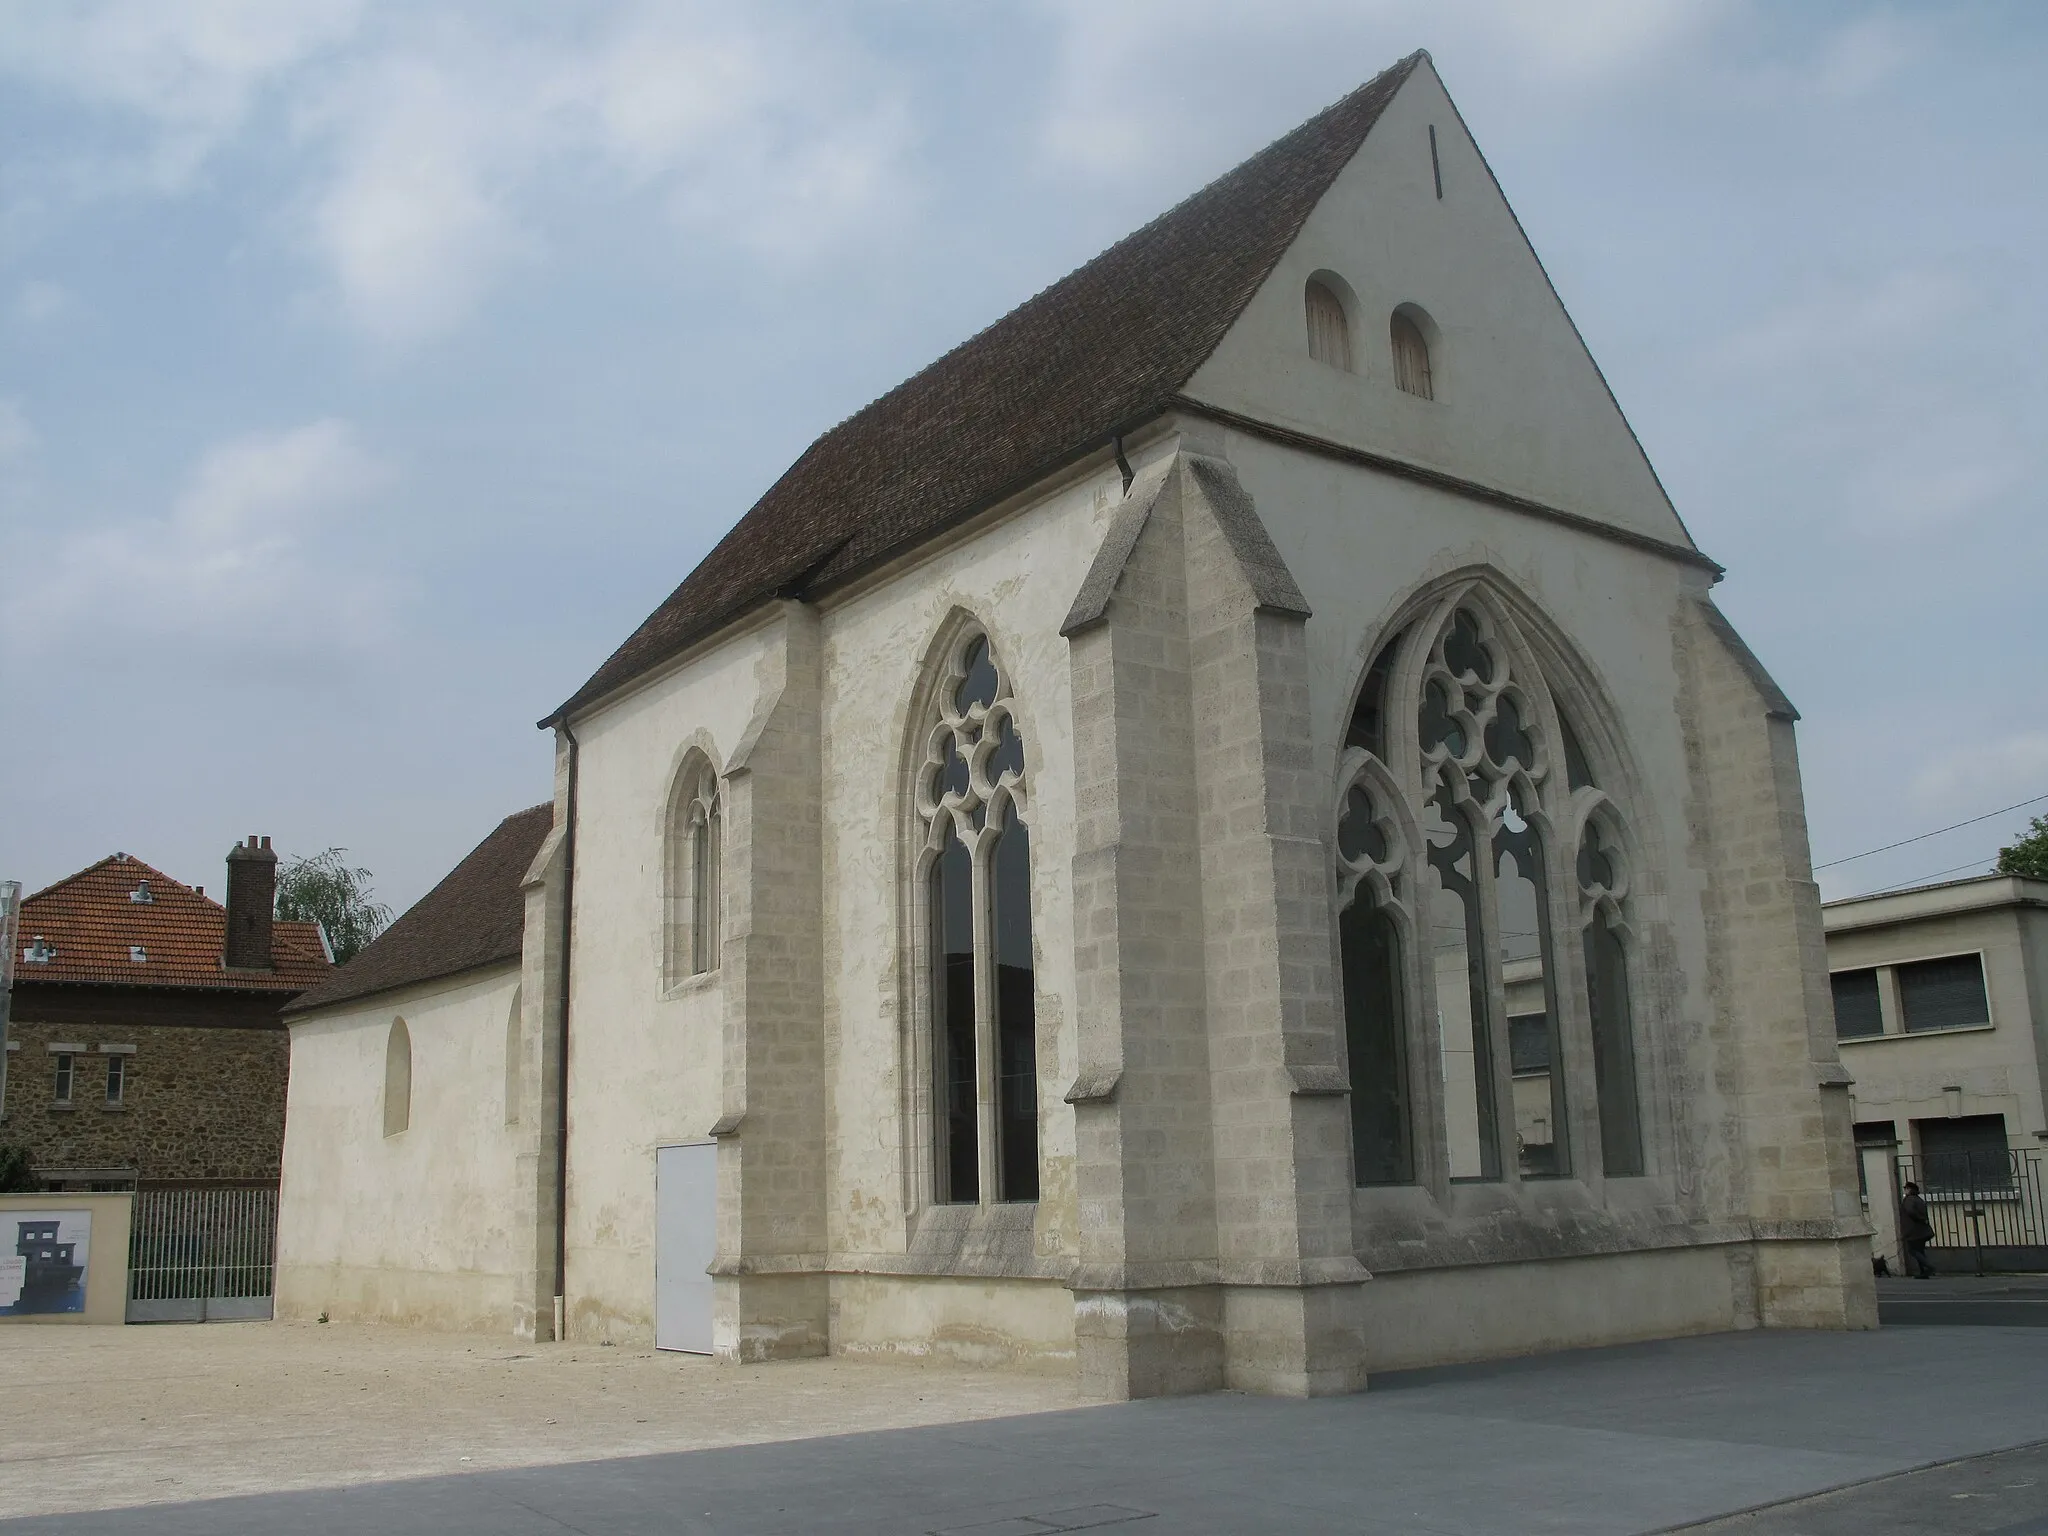 Photo showing: The twin churches St. Croix and St. Gorges St. Louis Eterlet Chelles, Seine-et-Marne, France)